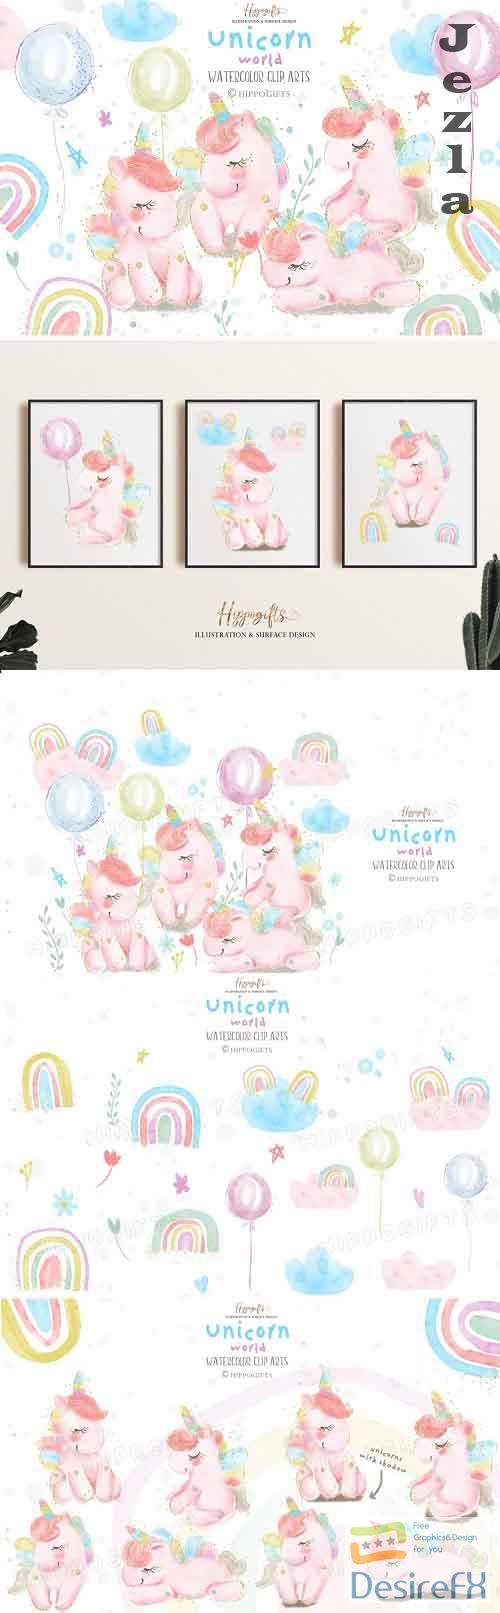 Watercolor unicorn illustrations - 572804